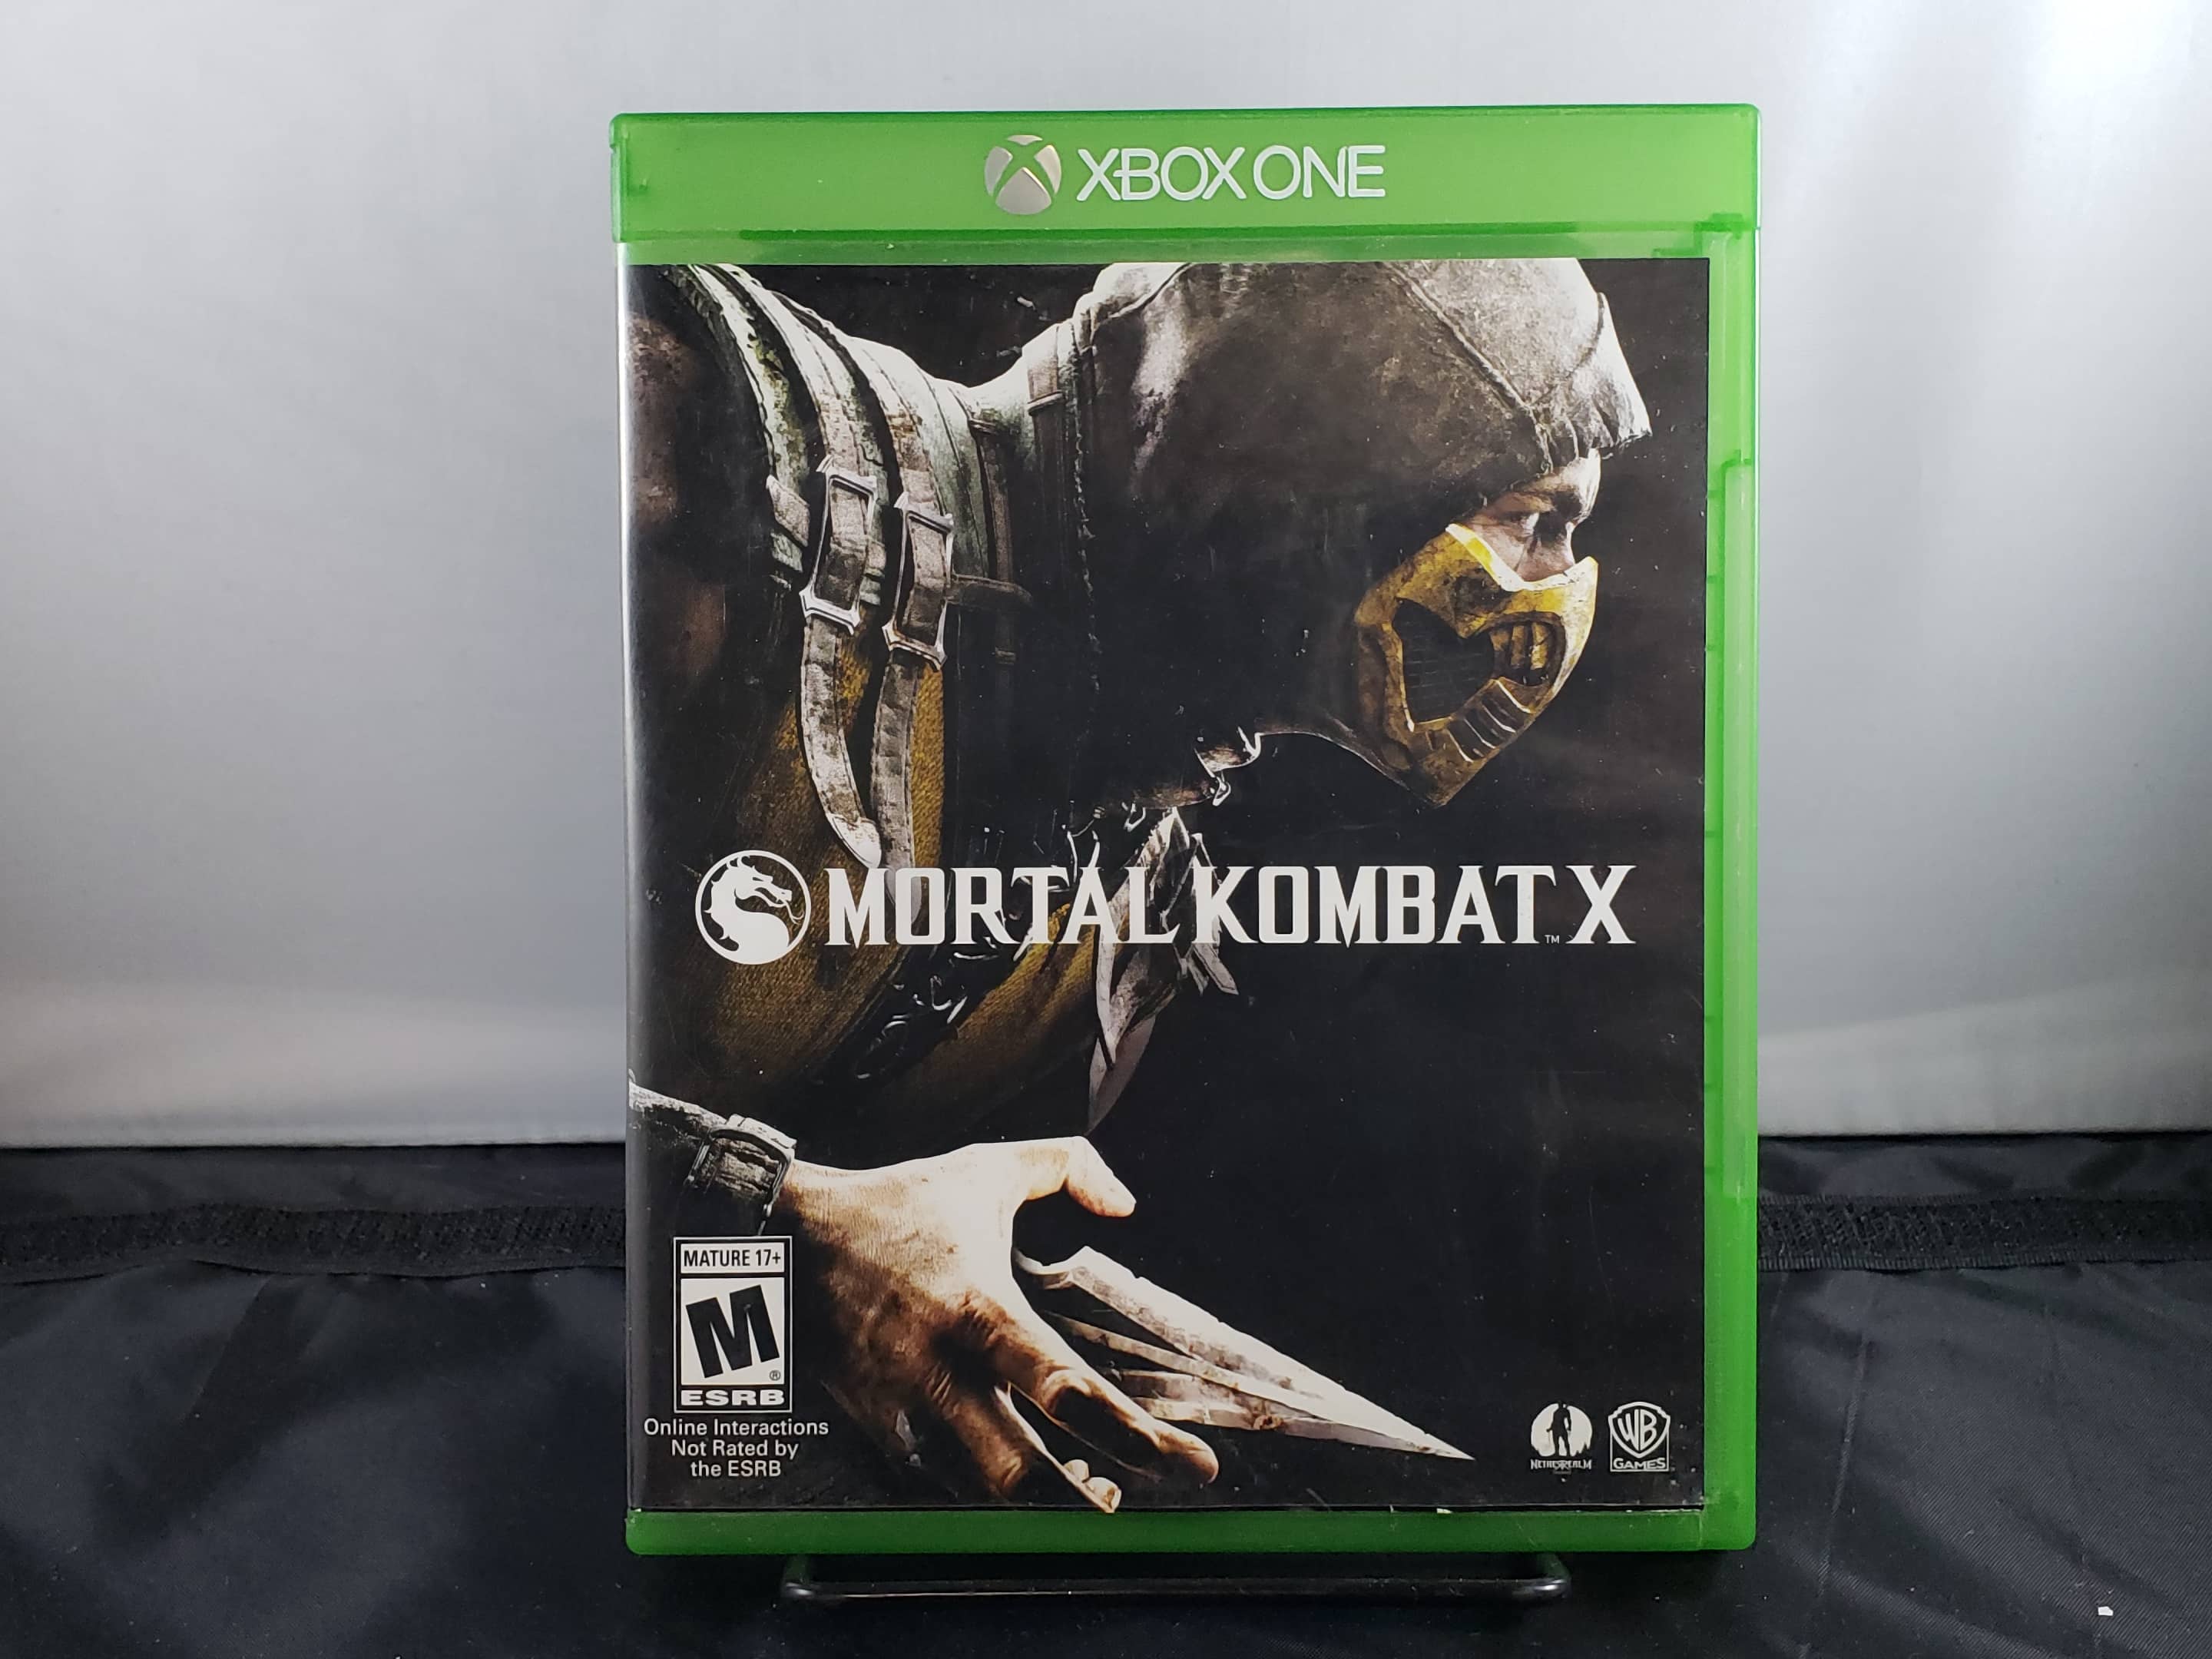 Mortal Kombat X 10 - Xbox One XB1 Video Game Complete with Manual CIB  883929426393